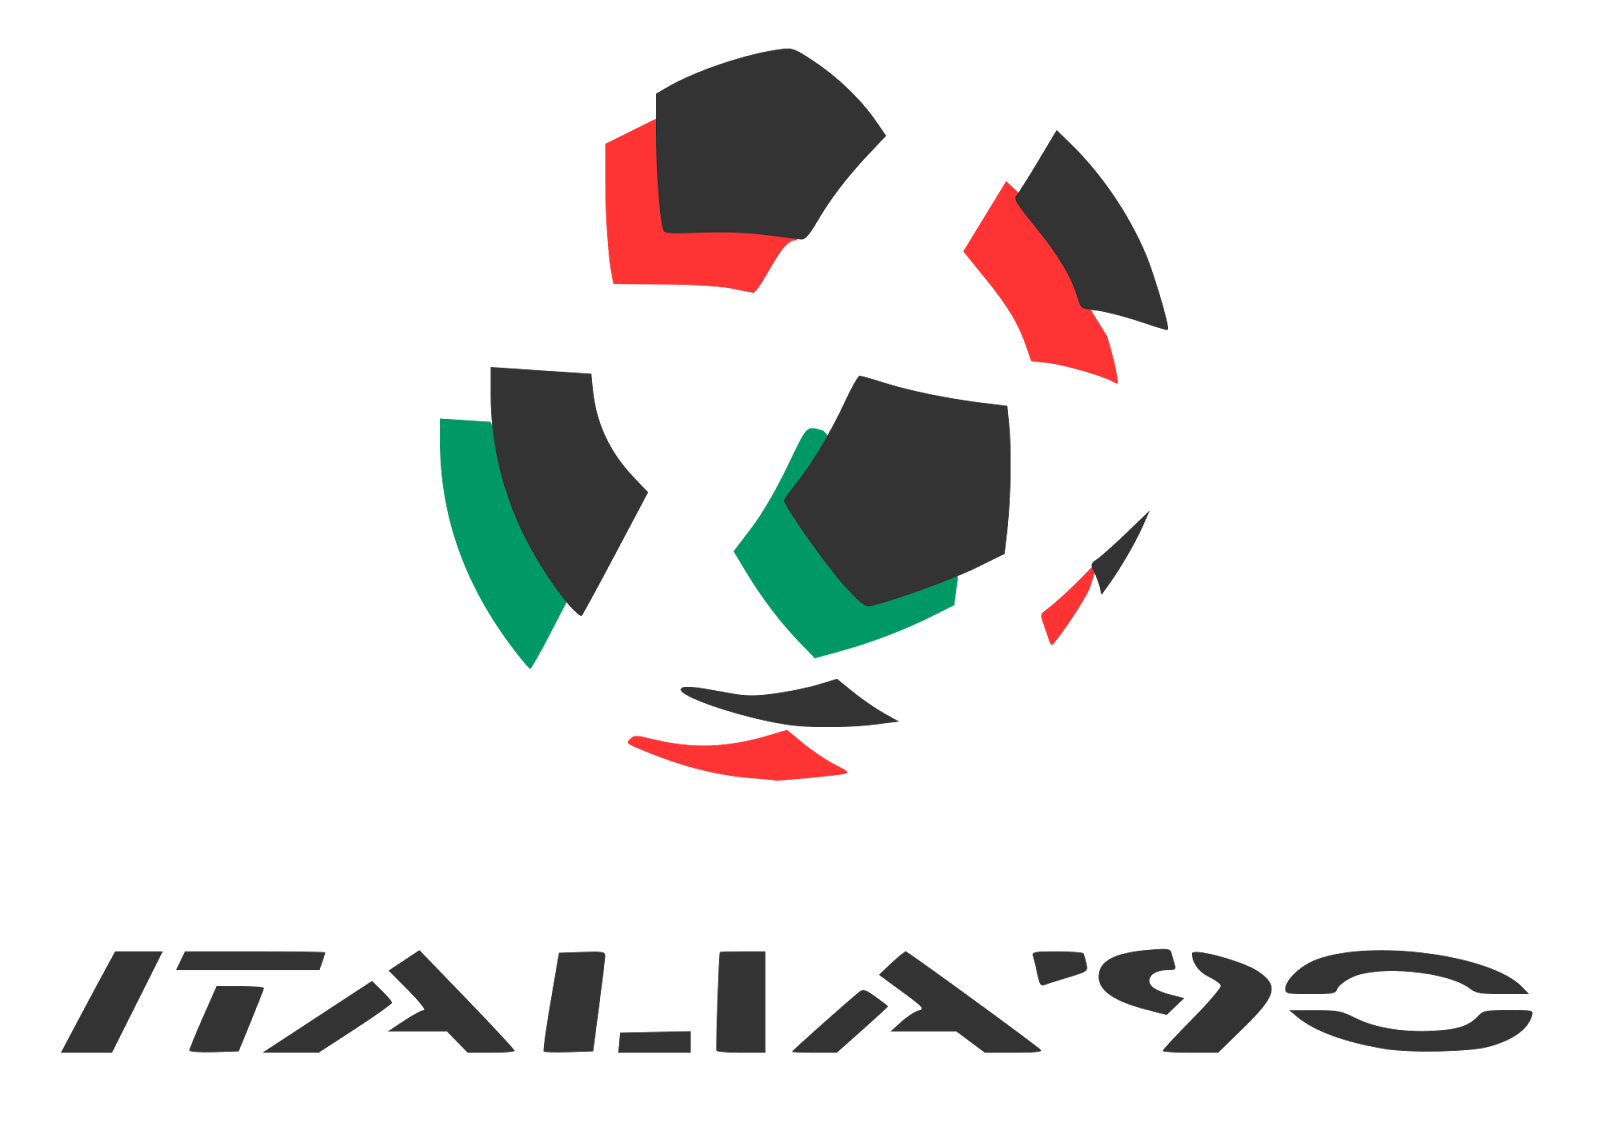 чемпионат мира по футболу, логотип, бренд, фирменный стиль, FIFA World Cup, logo, brand, Италия 1990